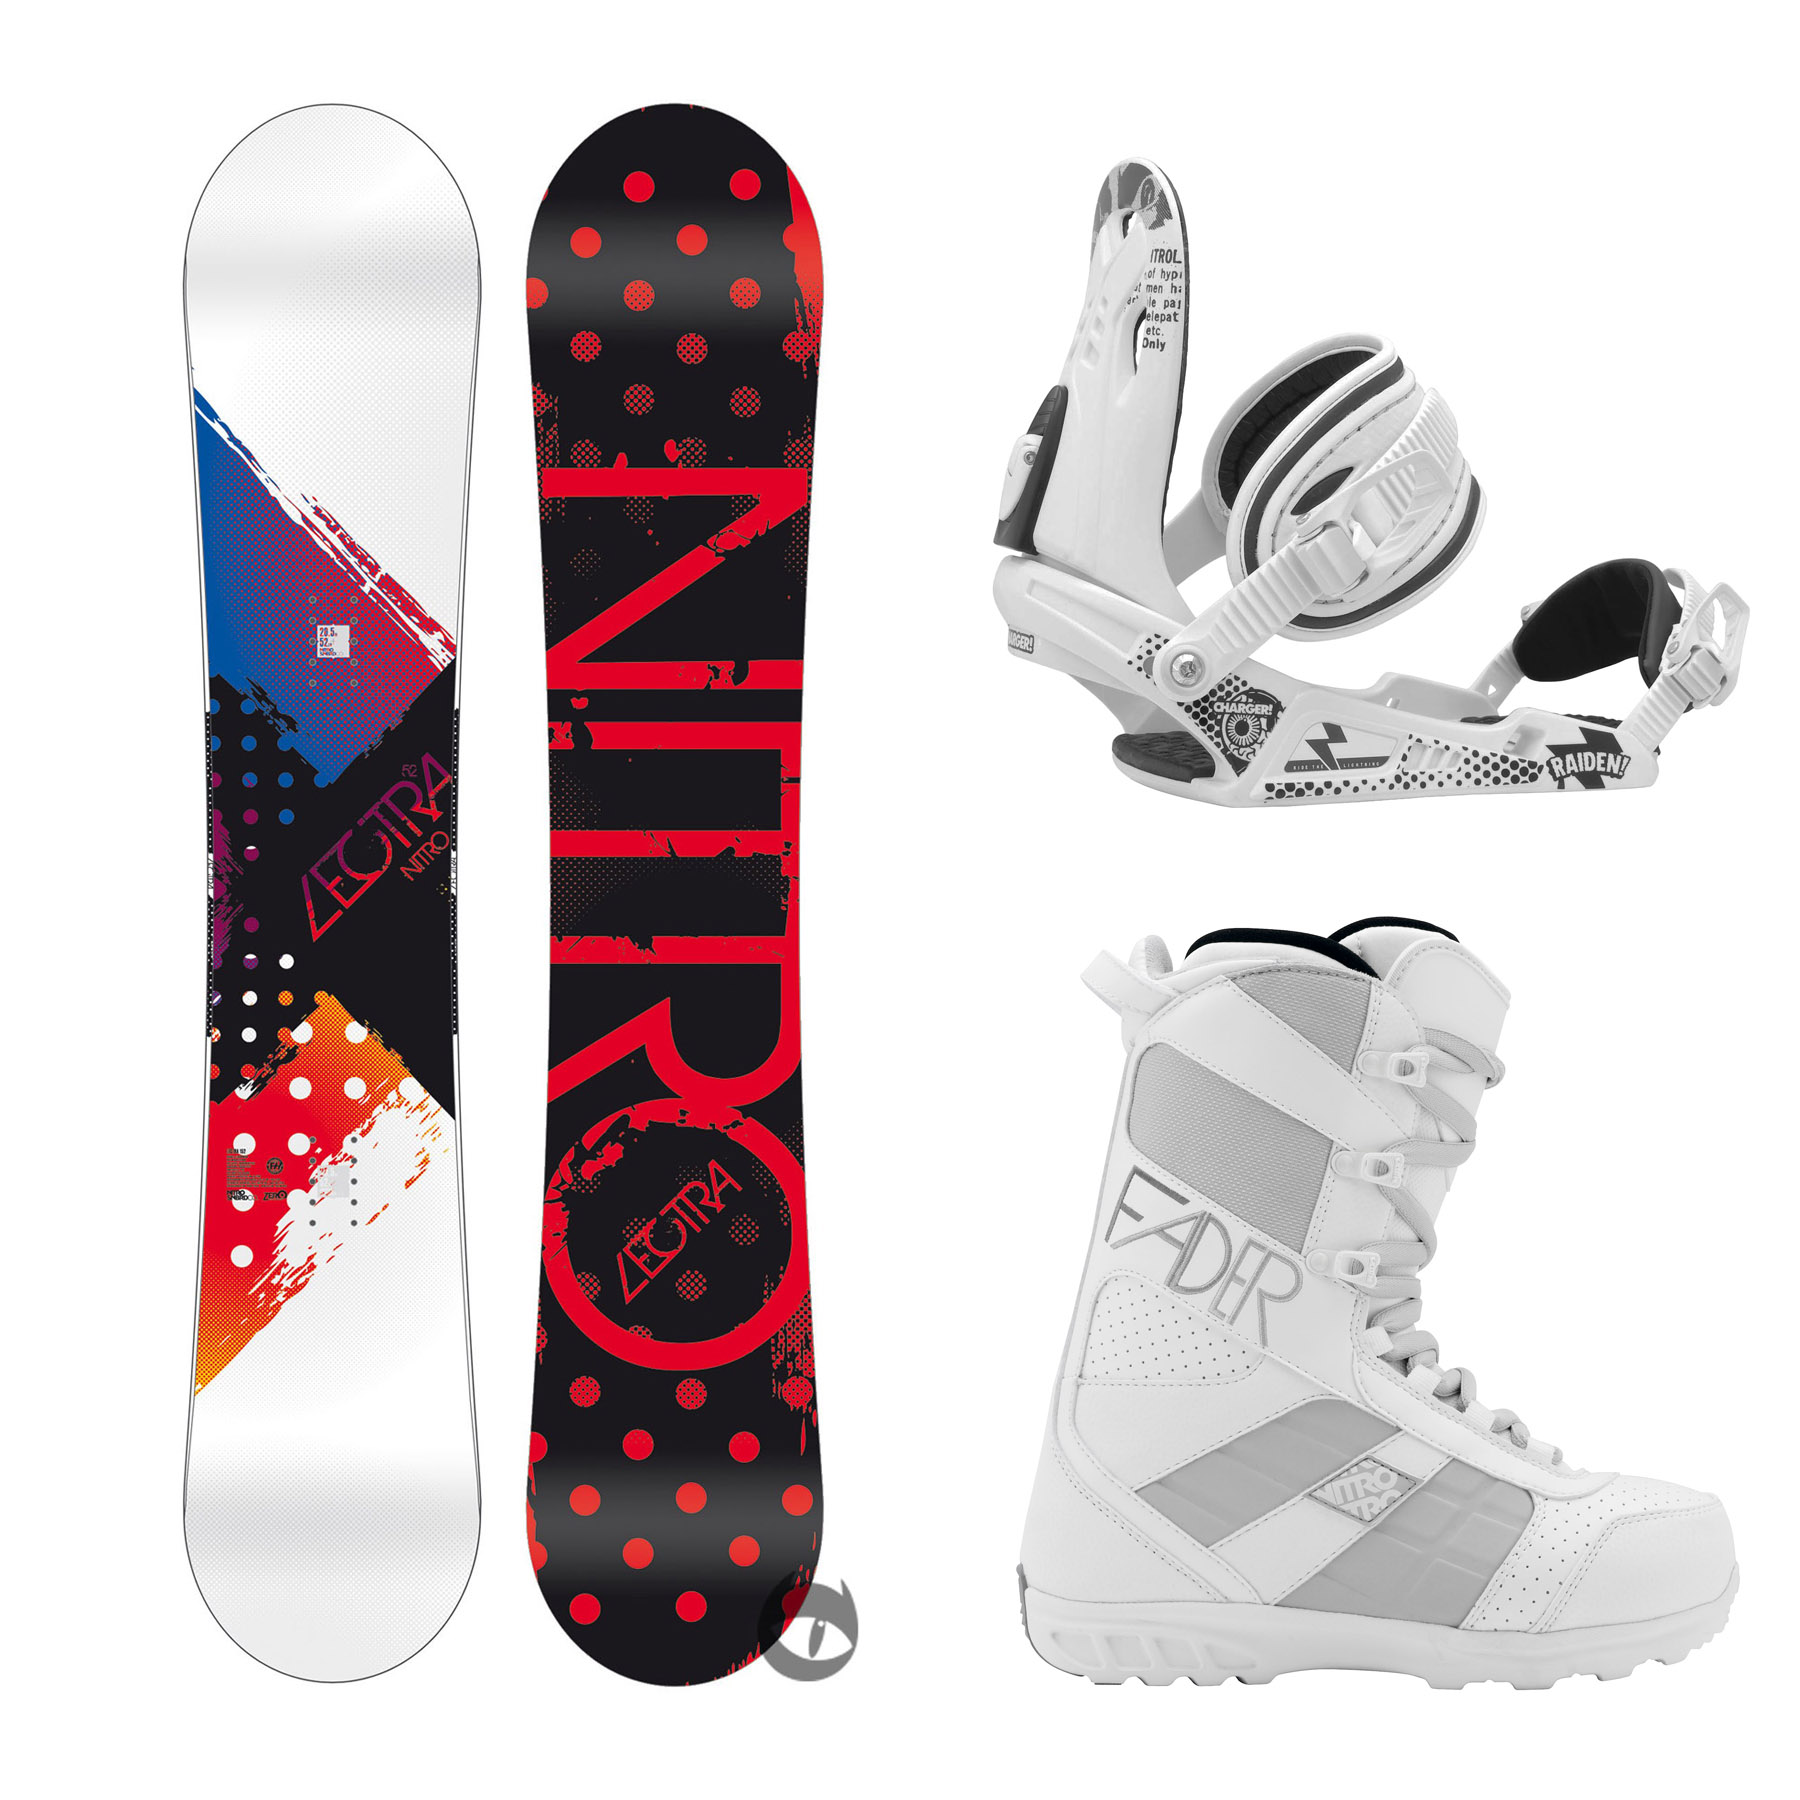 Nitro Snowboards Lectra 19 All Mountain Girls Snowboard pour